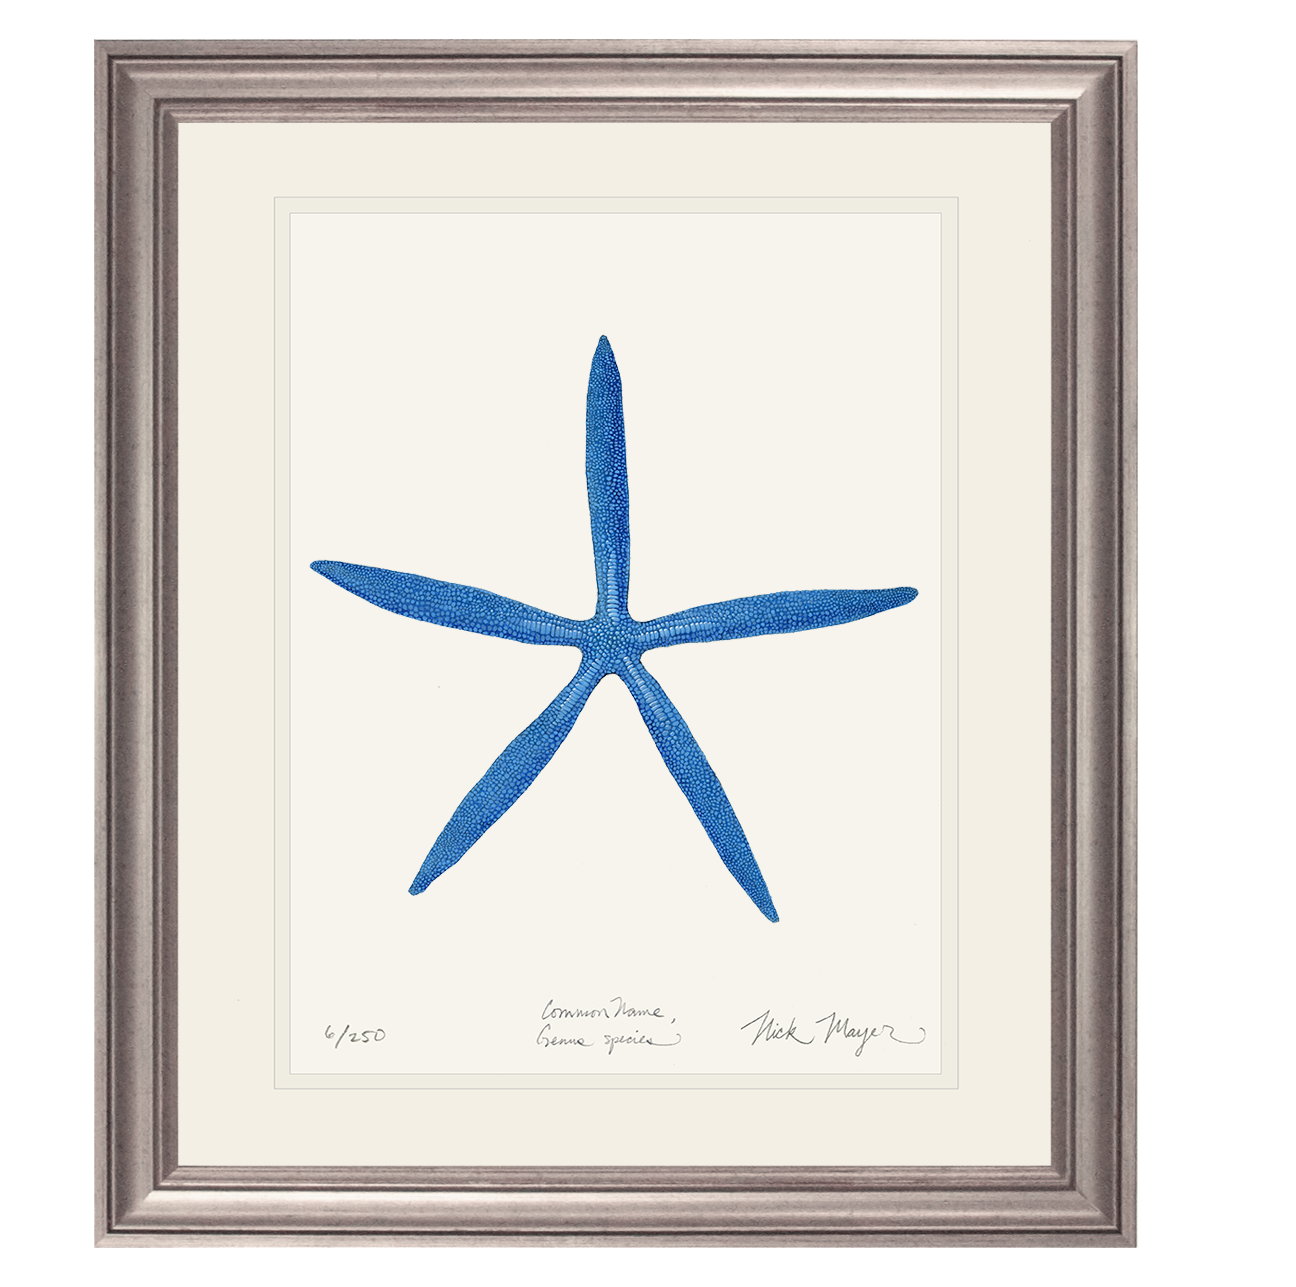 Blue Linckia II Starfish Print